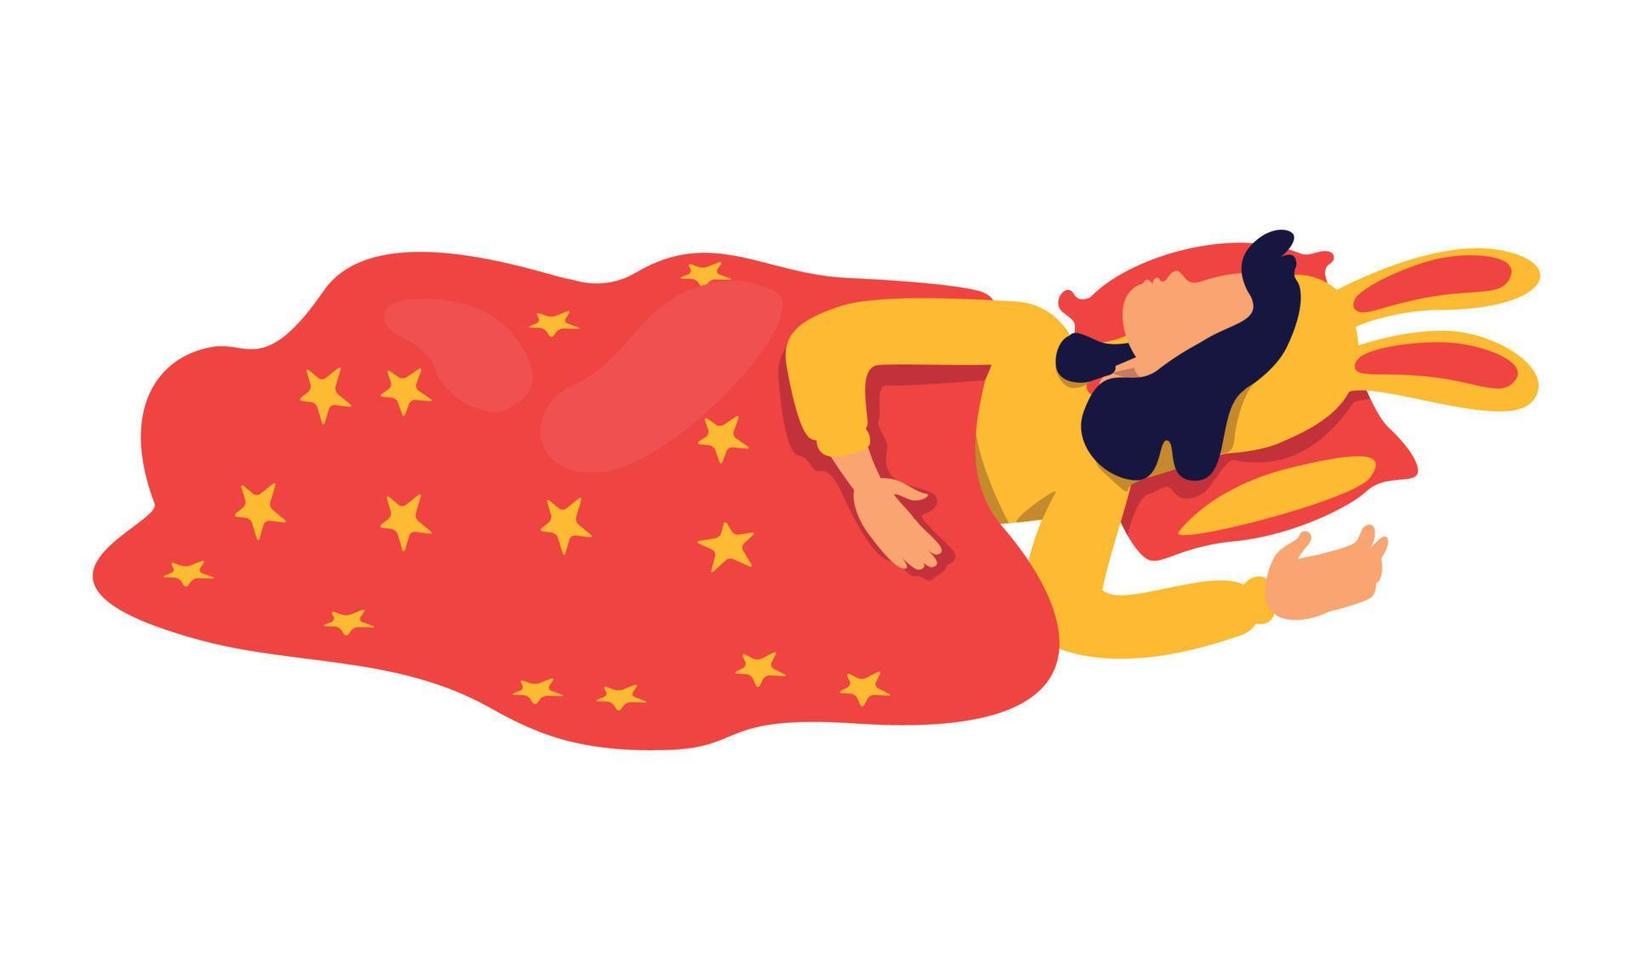 klein meisje slaapt onder ster gooi deken semi-egale kleur vector karakter